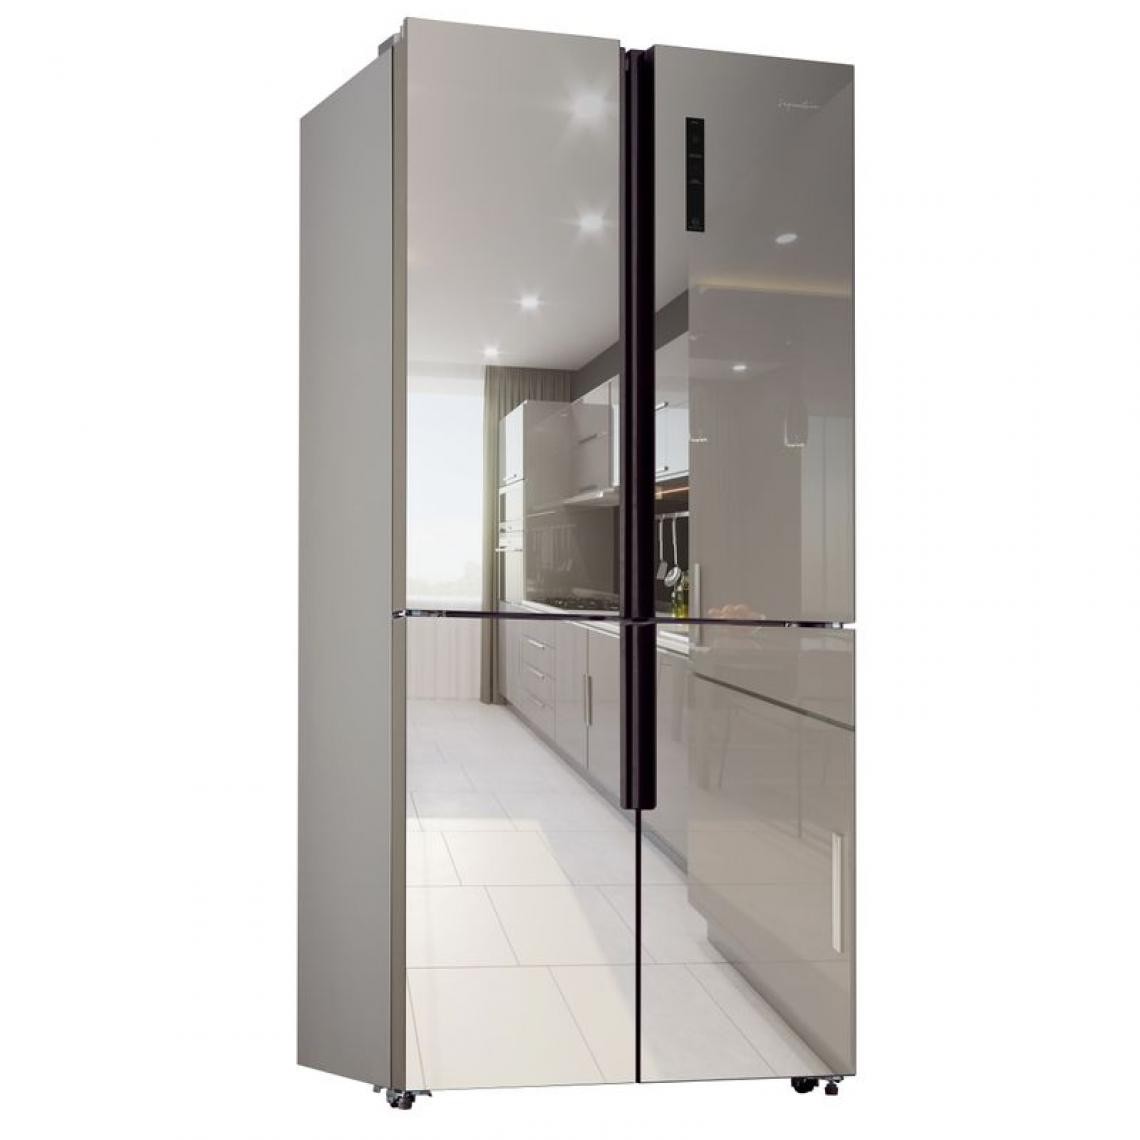 Signature - Réfrigérateur américain SIGNATURE SFDOOR483BGNF 482L Miroir - Réfrigérateur américain